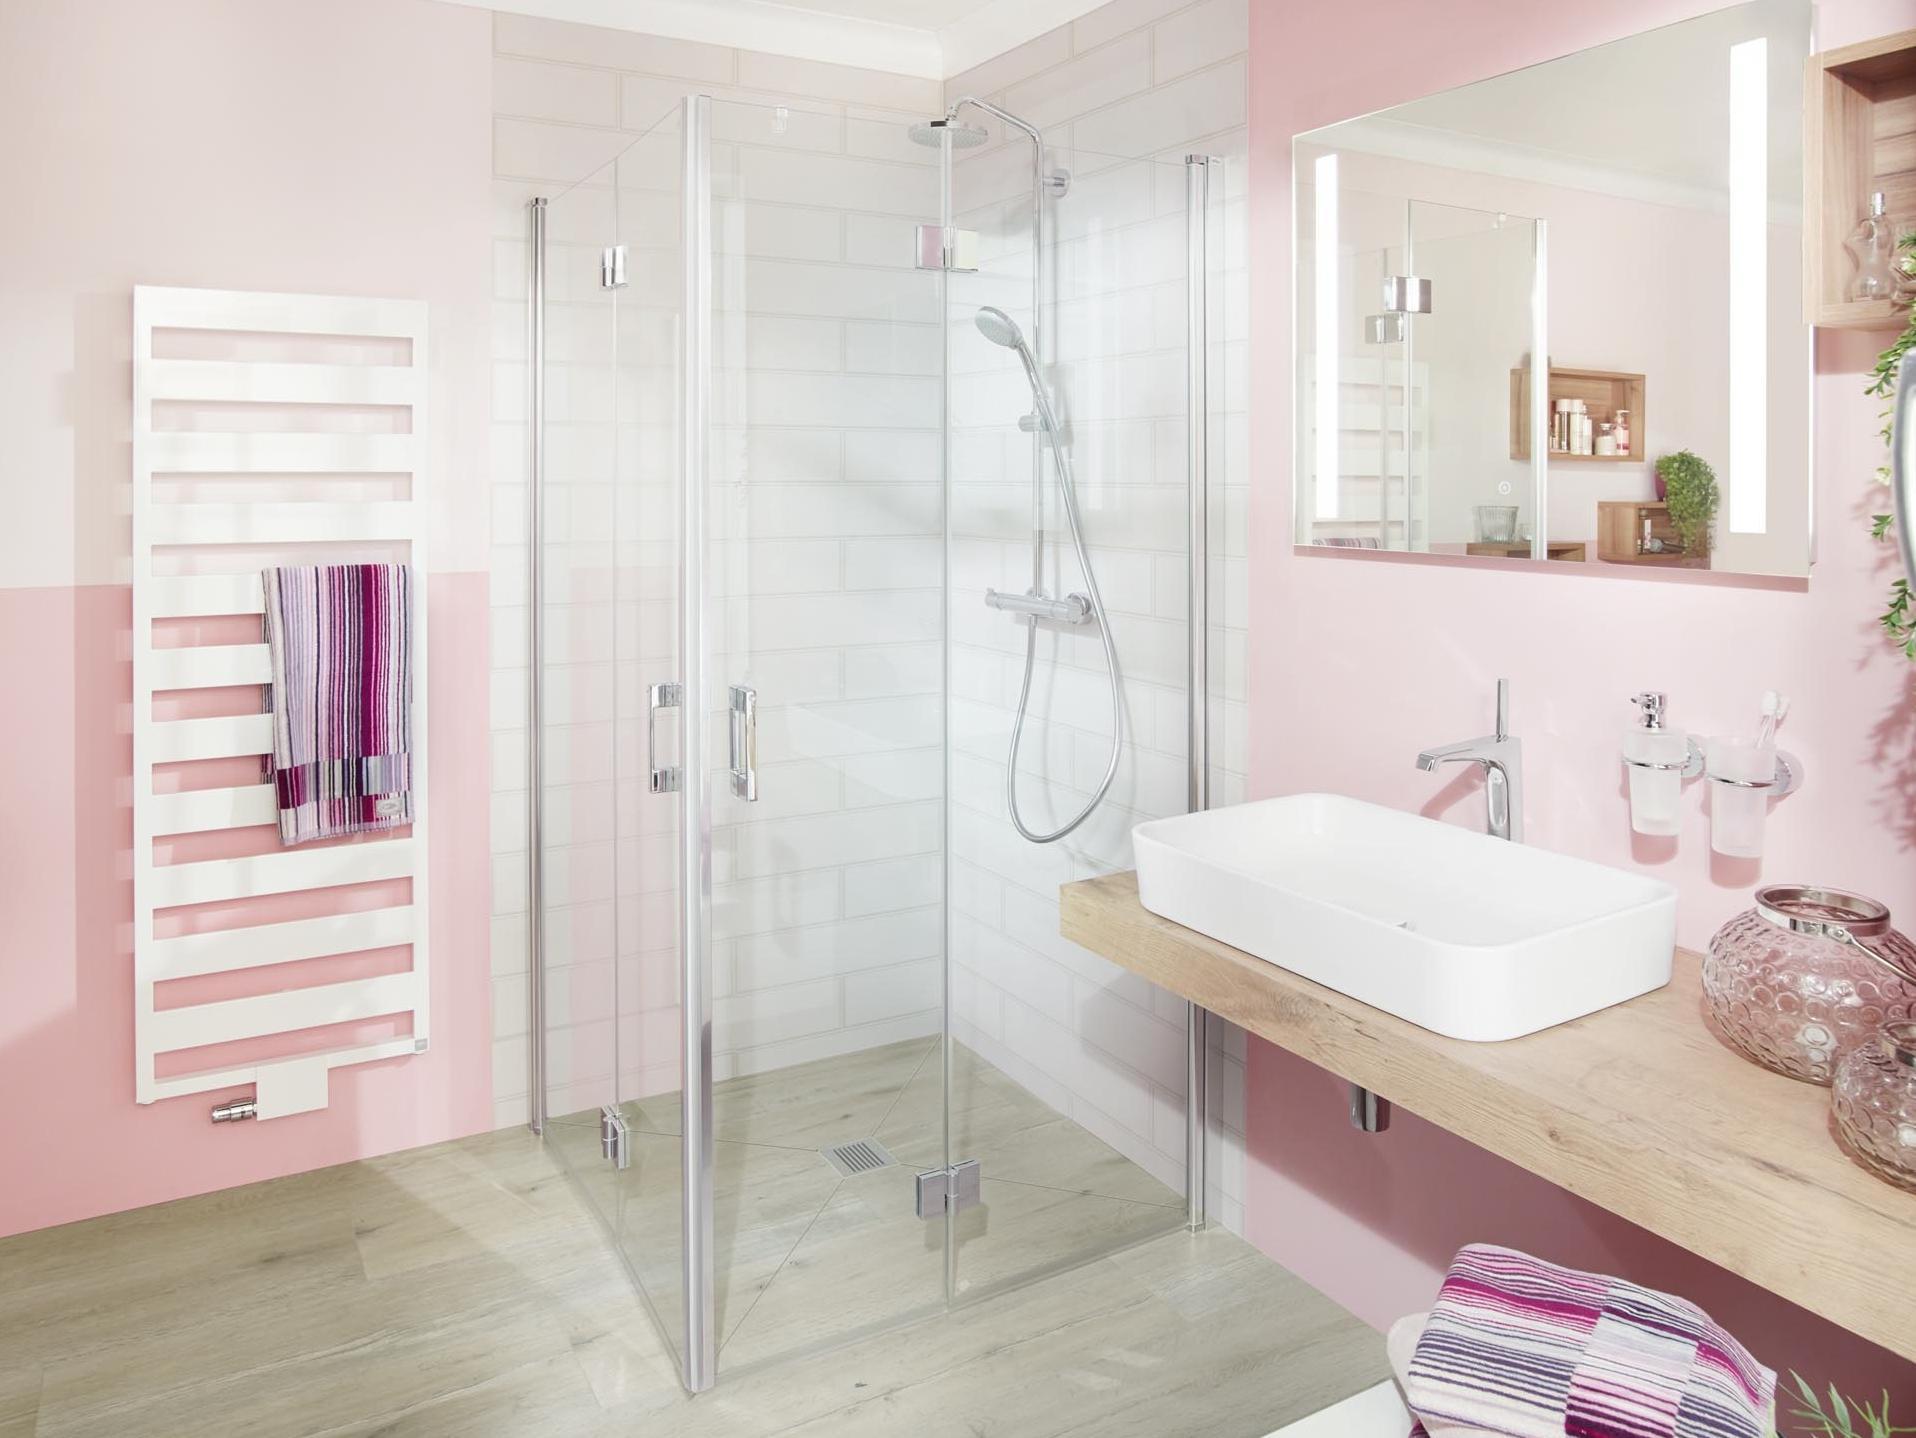 Kermi Inspiration bathroom with LIGA, POINT, and CASTEO